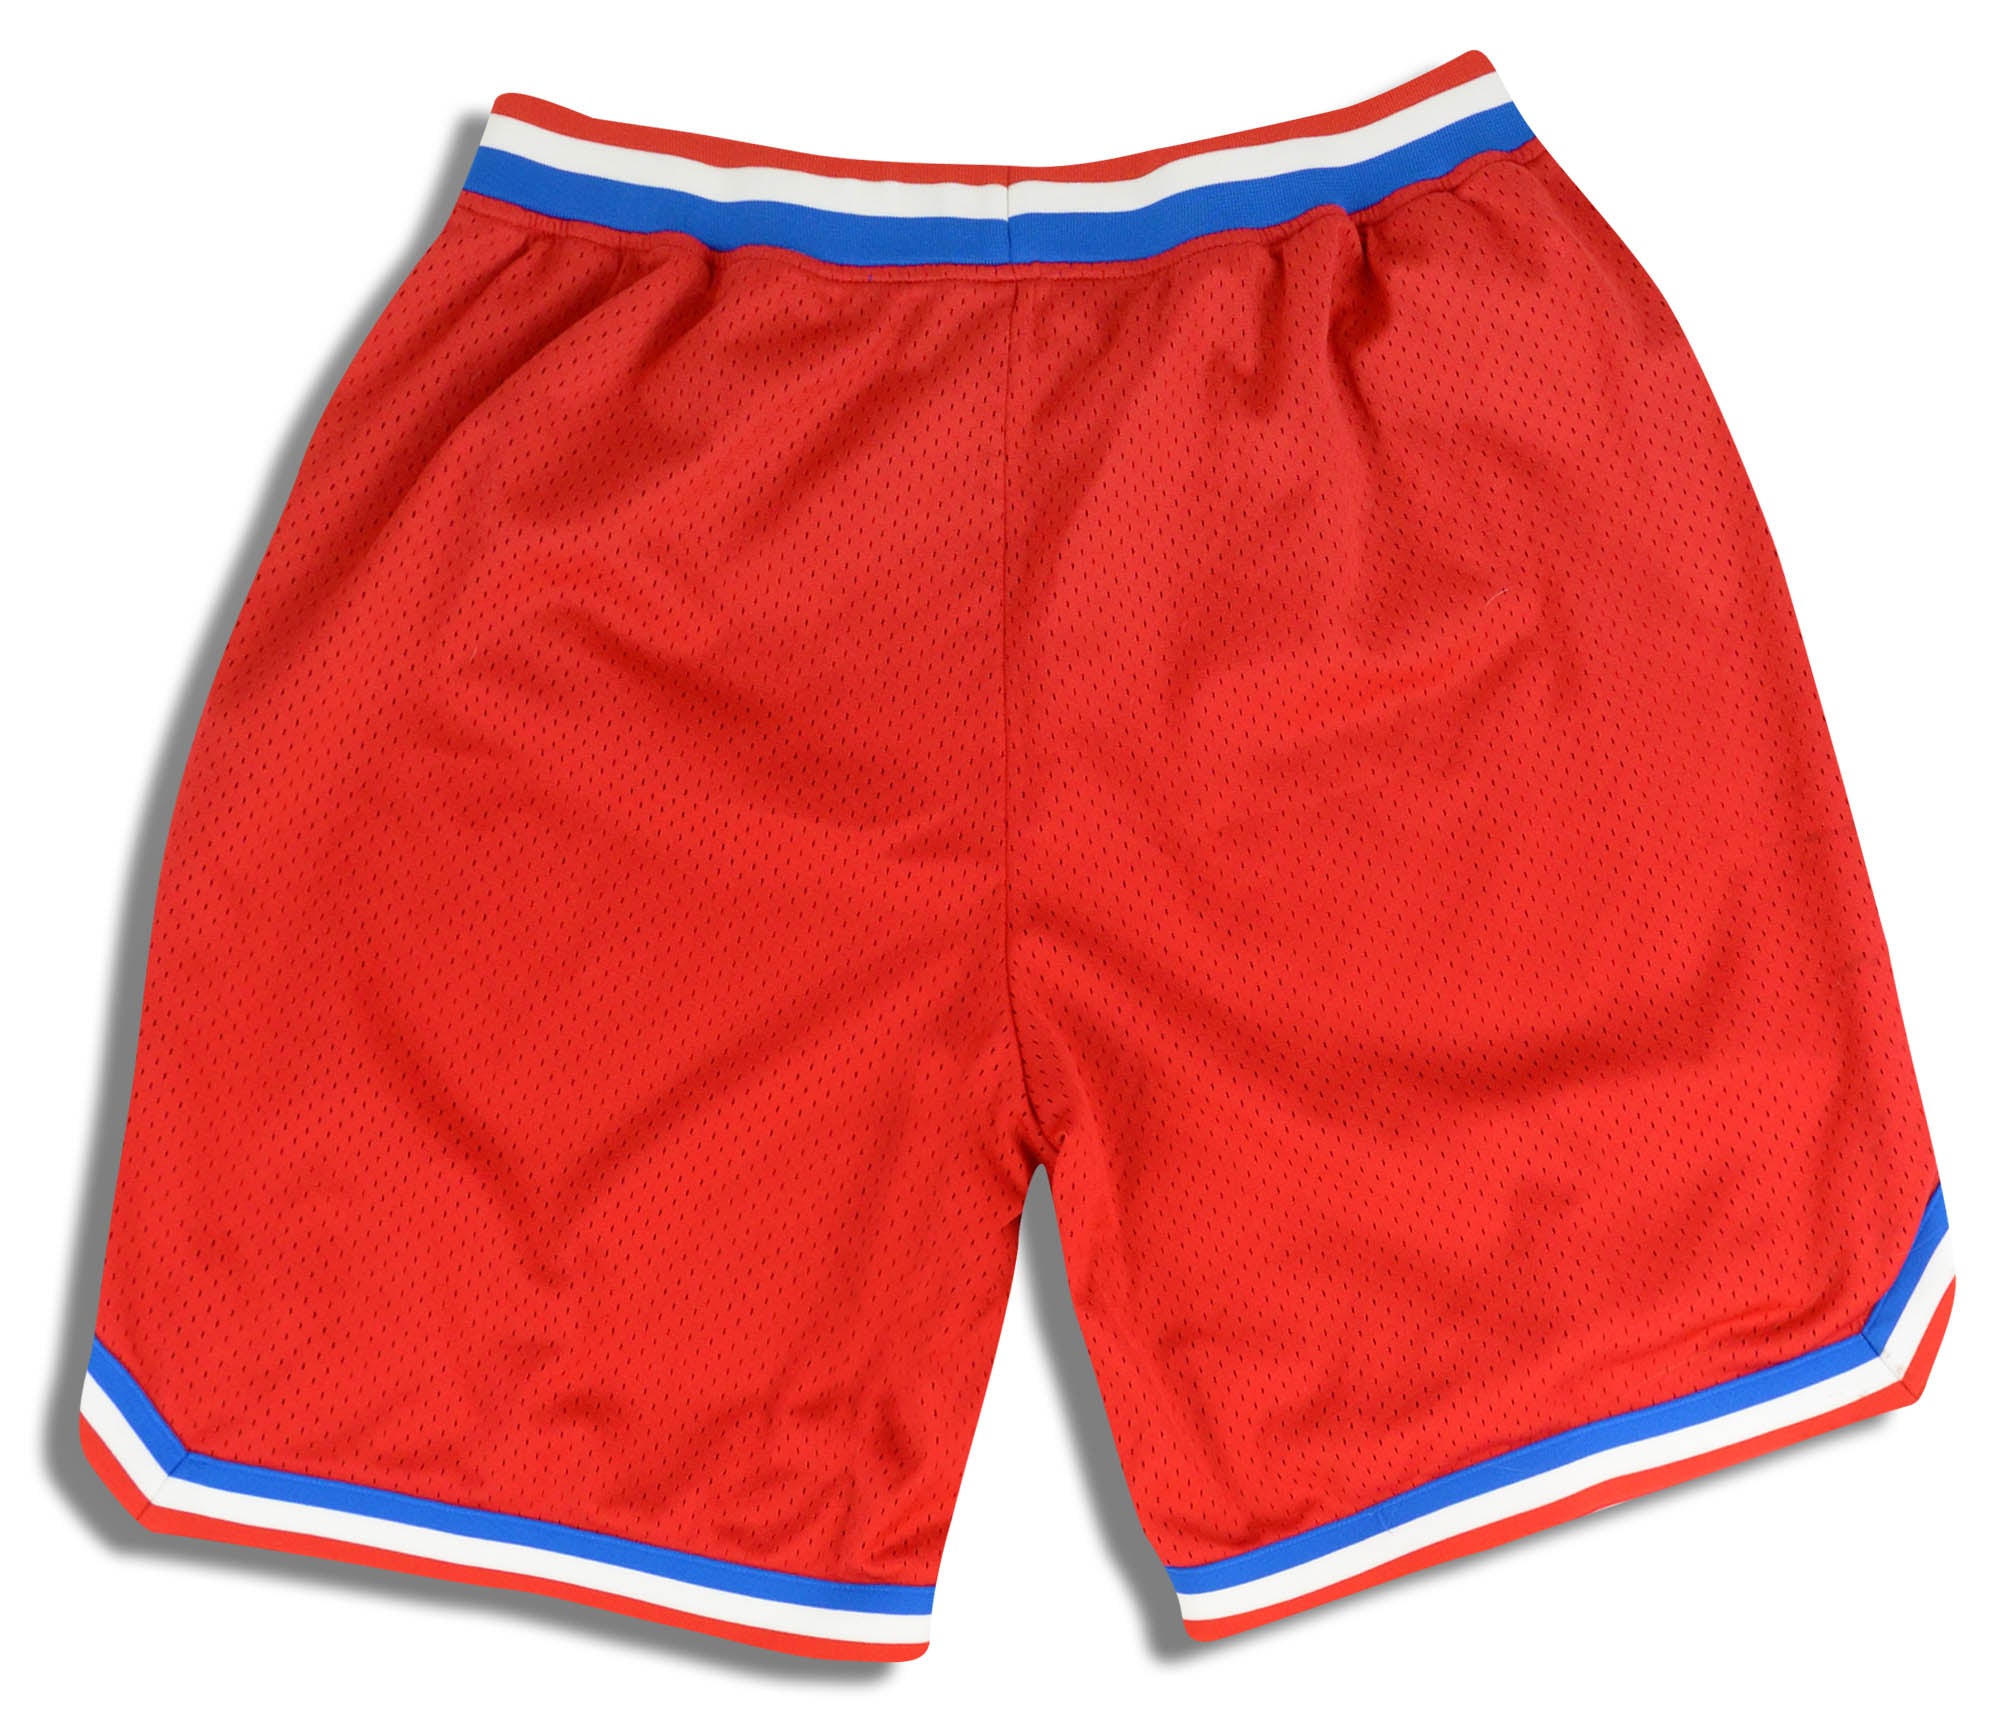 Philadelphia 76ers Vintage 90s Champion Warm Up Basketball Pants - Hardwood  Classics - Red, Blue & White - Men's Size Small - FREE SHIPPING